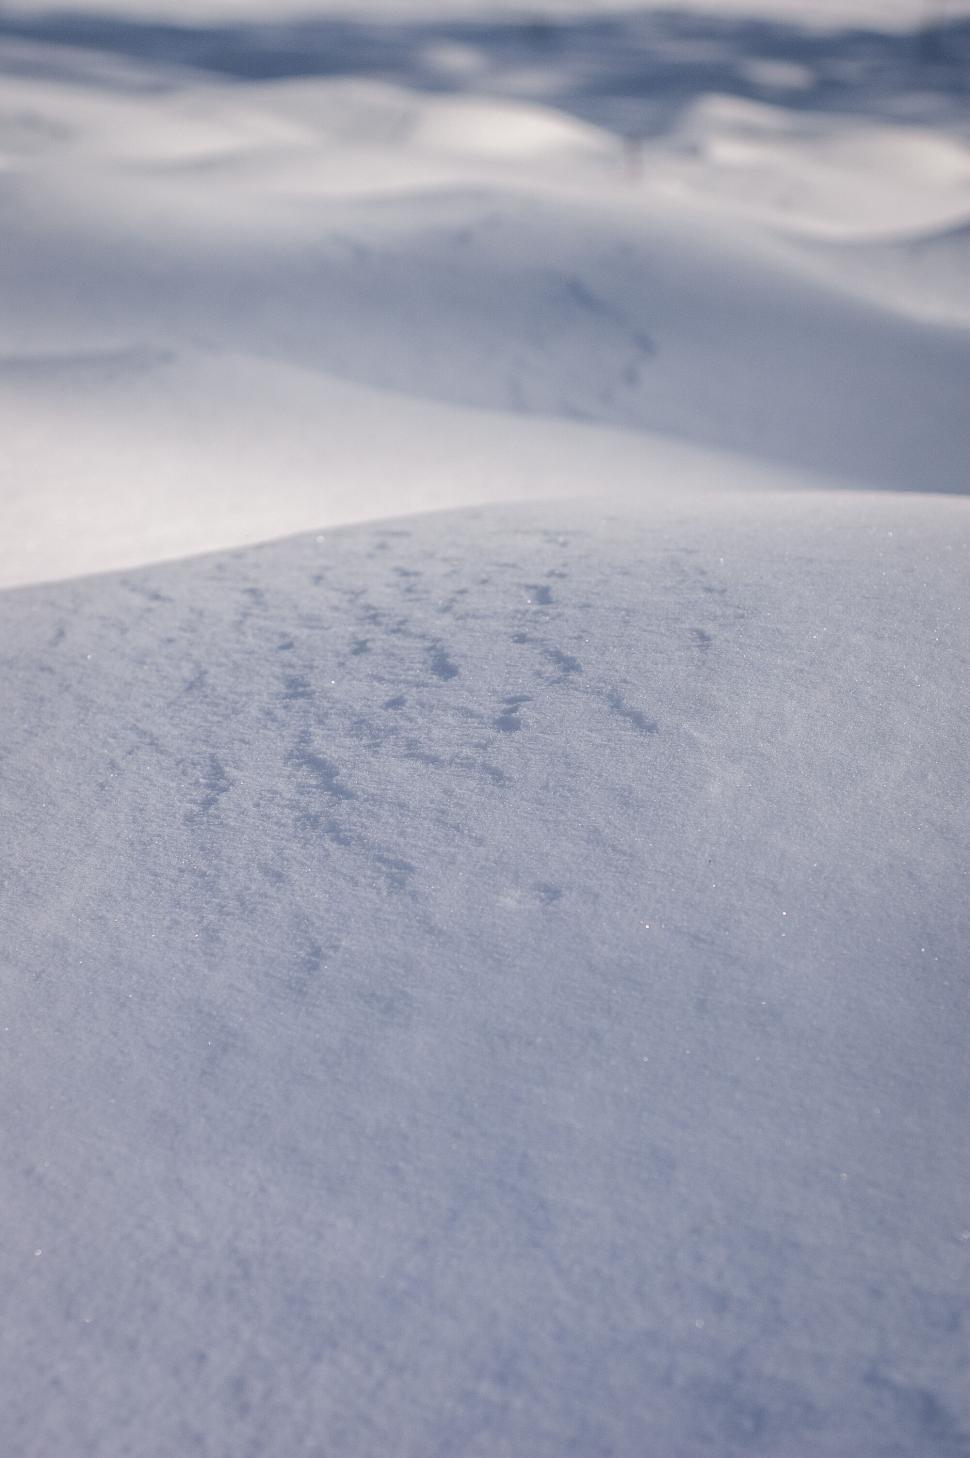 Free Image of Undisturbed snow surface under sunlight 